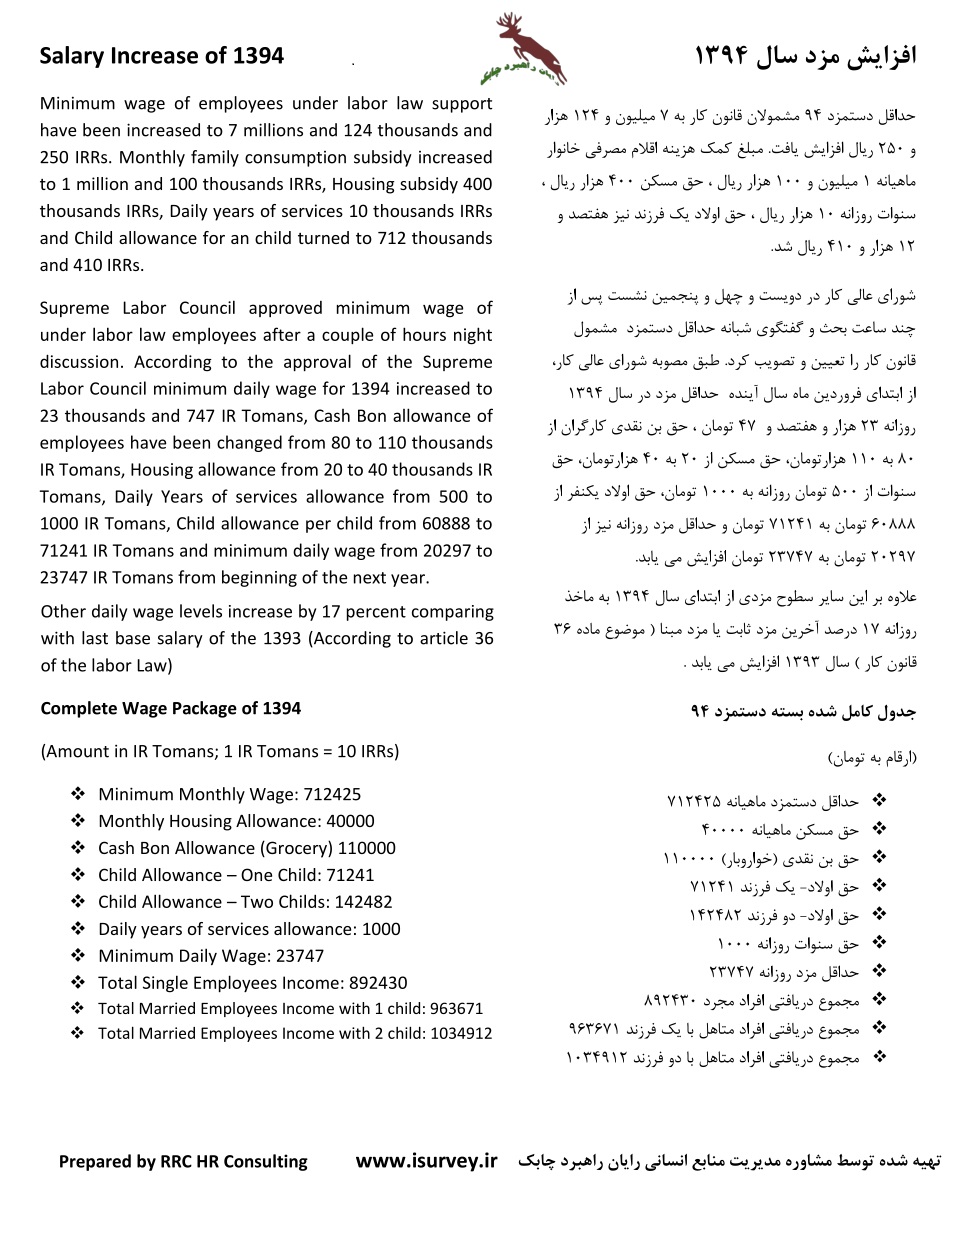  Iran annual salary increase from ministry of labor minimum wage minimum salary 1394 